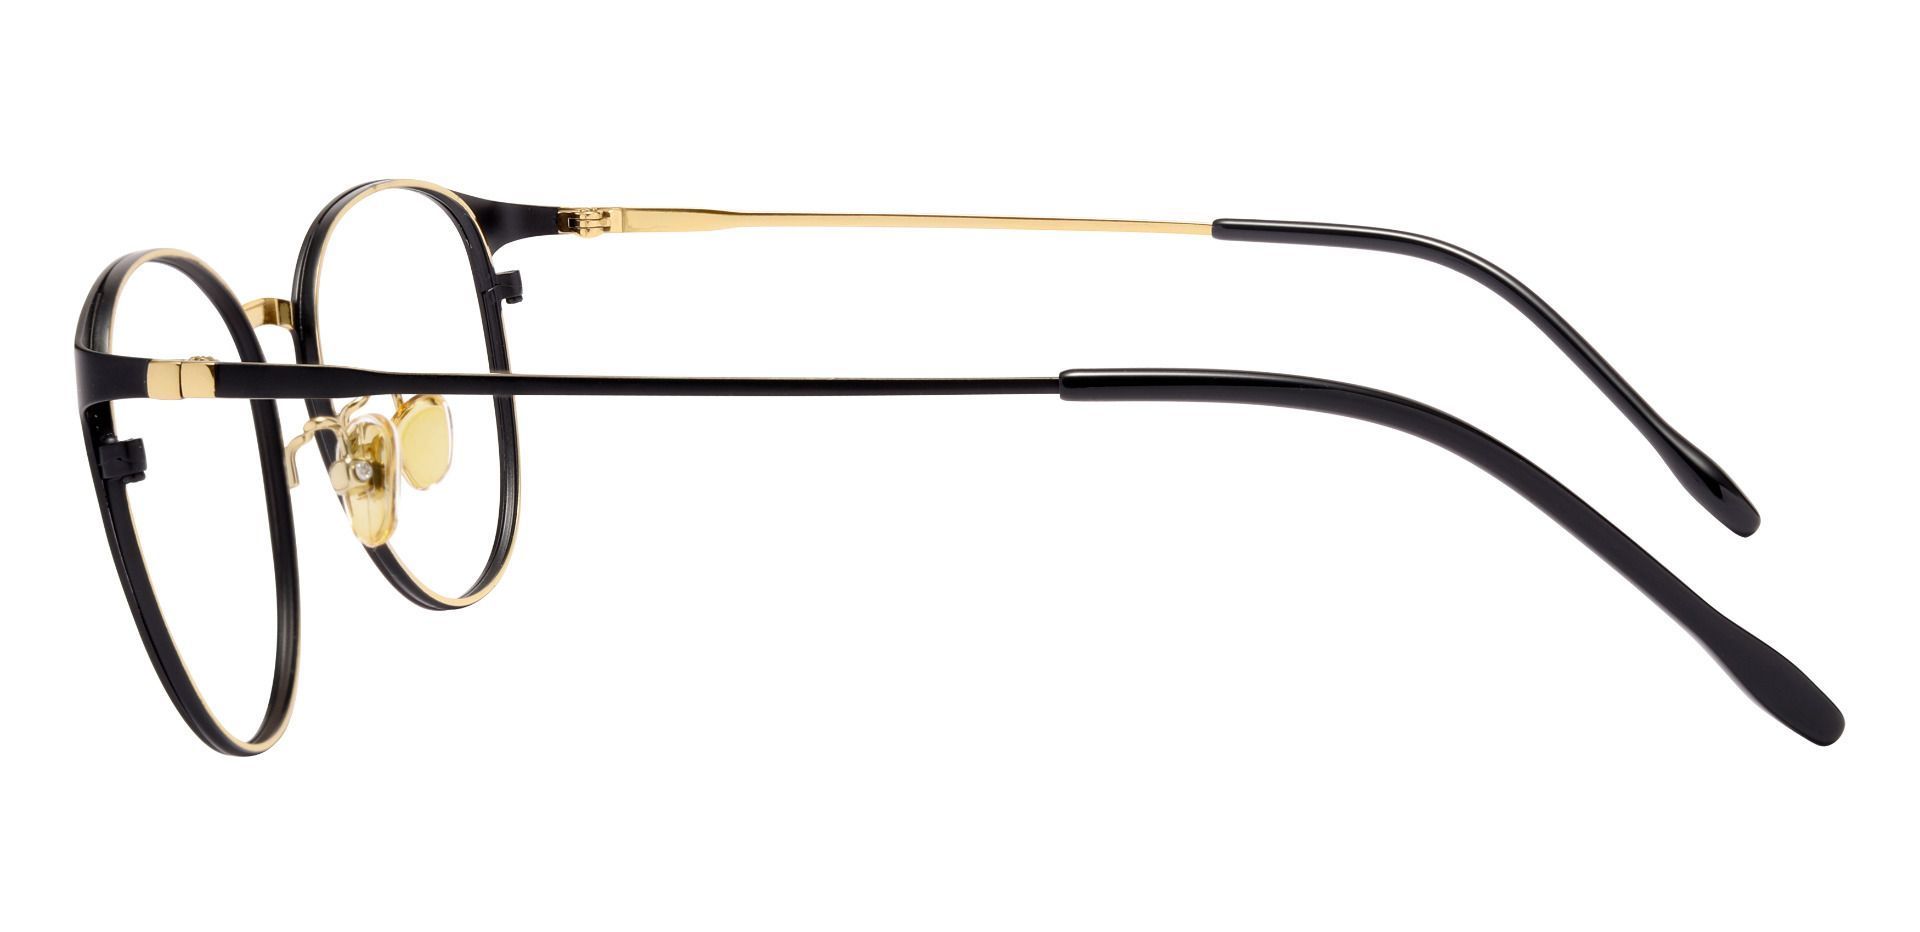 Bertie Oval Eyeglasses Frame - Black